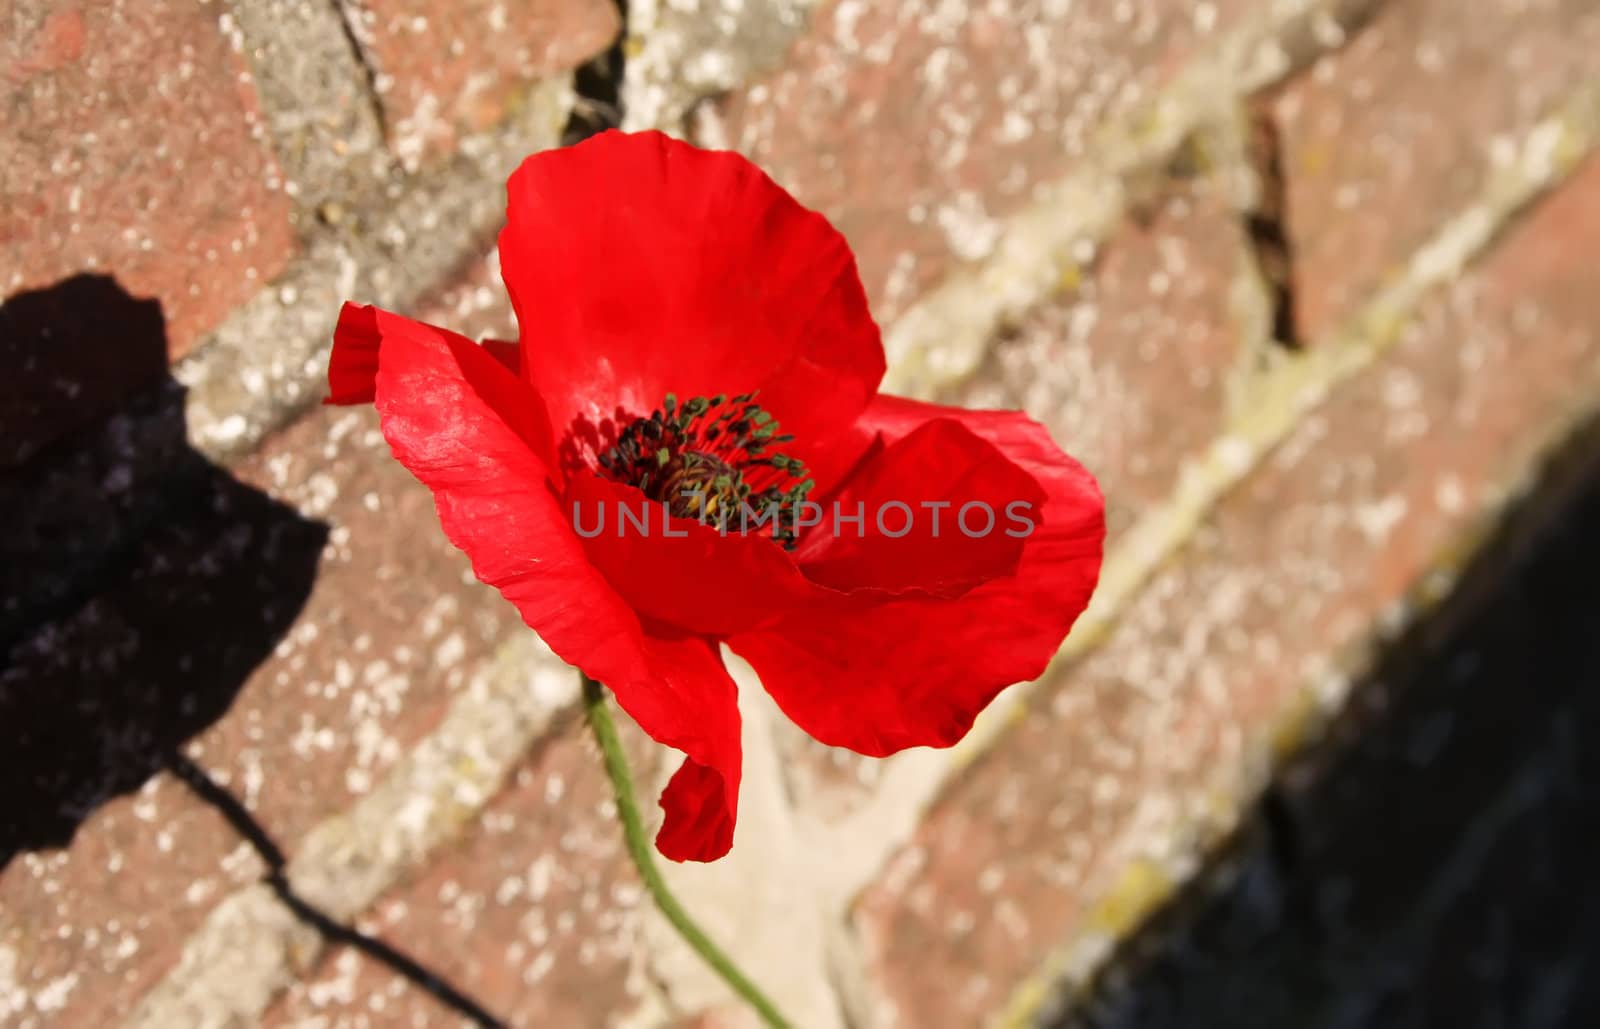 Red poppy flower on brick wall